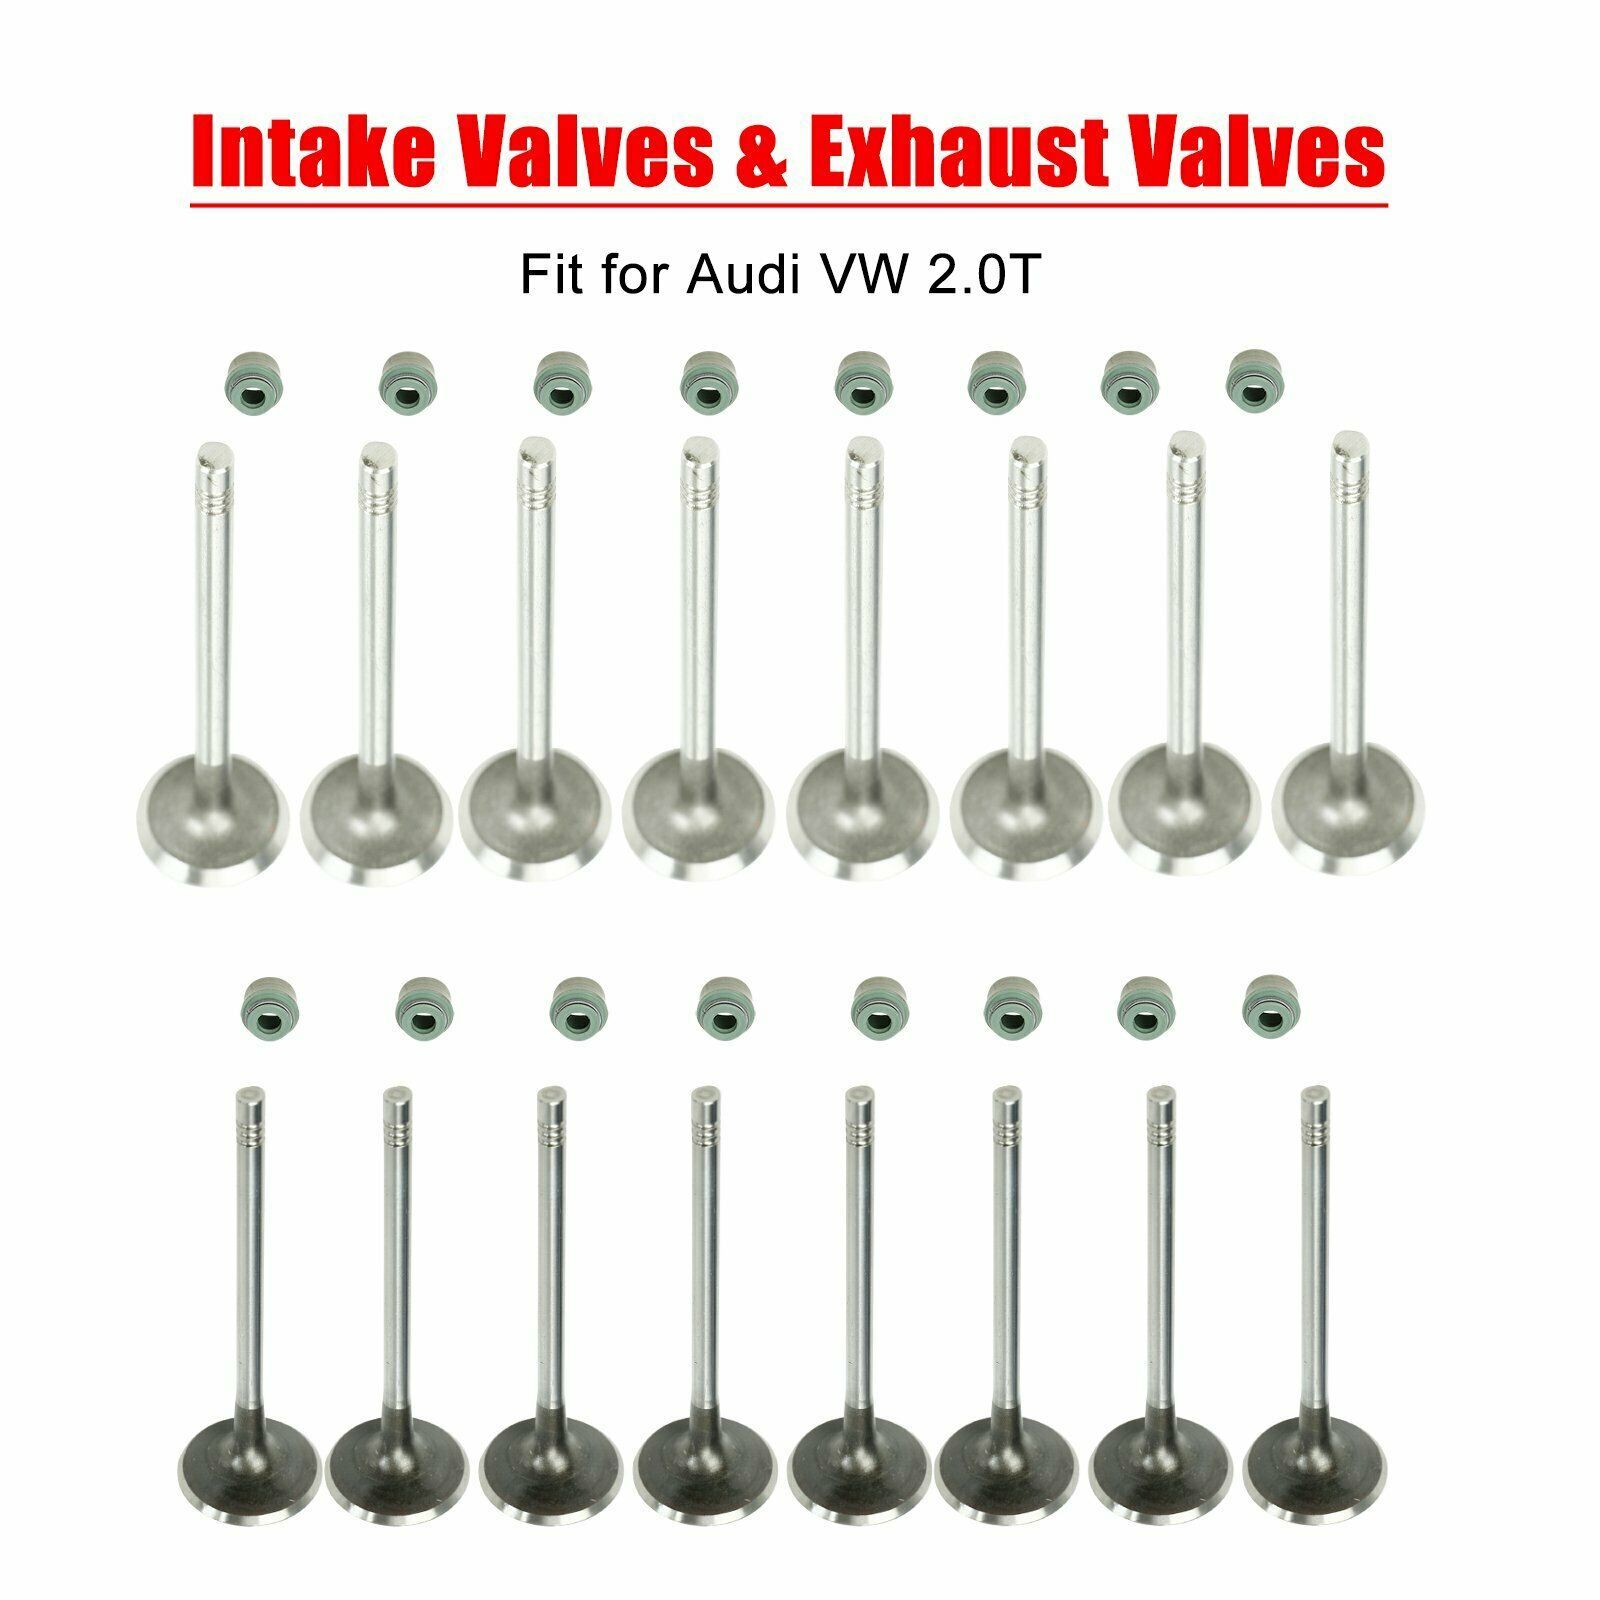 Engine Intake Valves & Exhaust Valves 16pc Kit Fit for Audi VW 2.0T